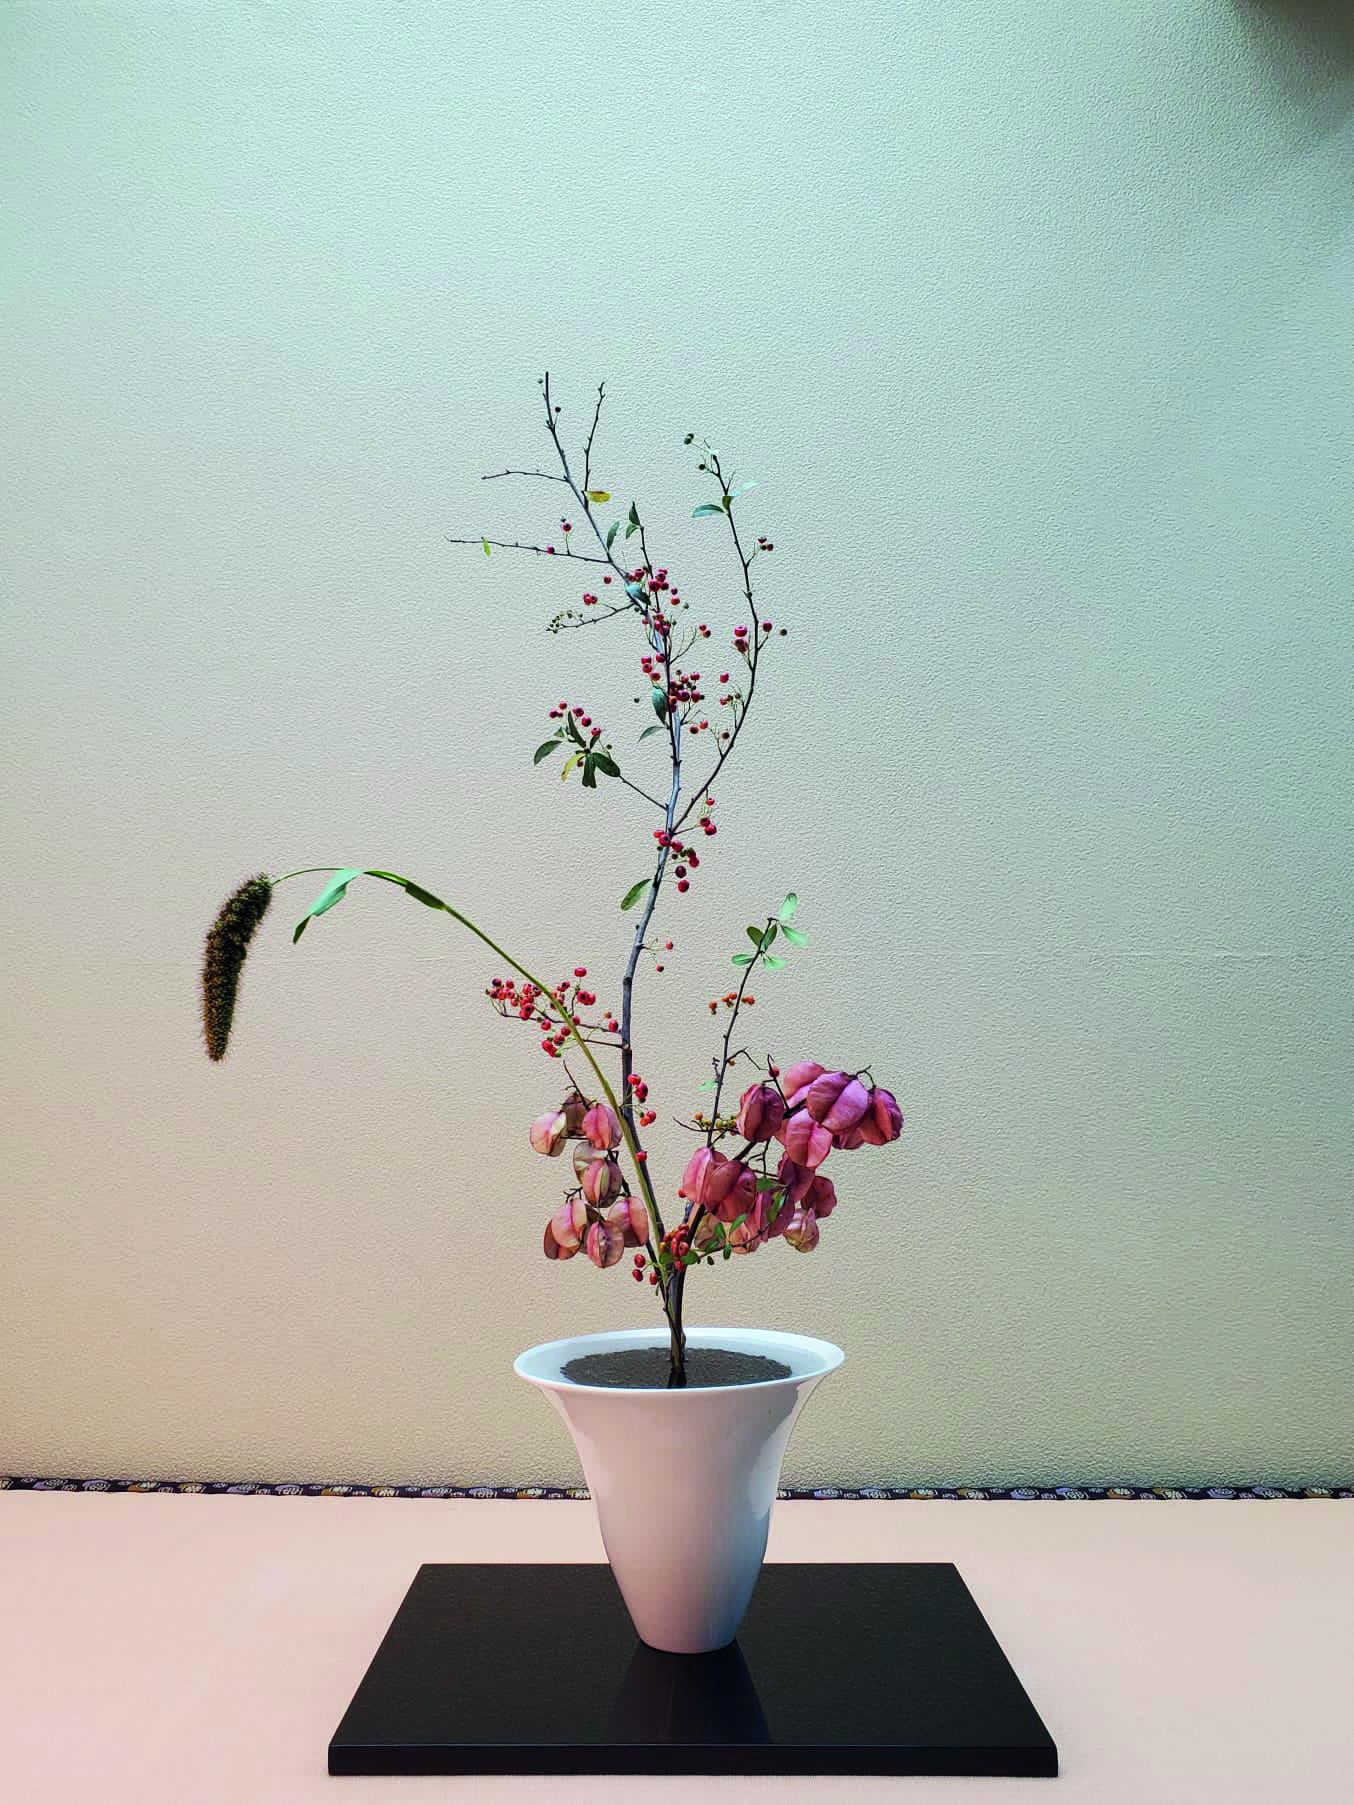 Flower Power: Local Florist Mode Mok on the Art of Ikebana